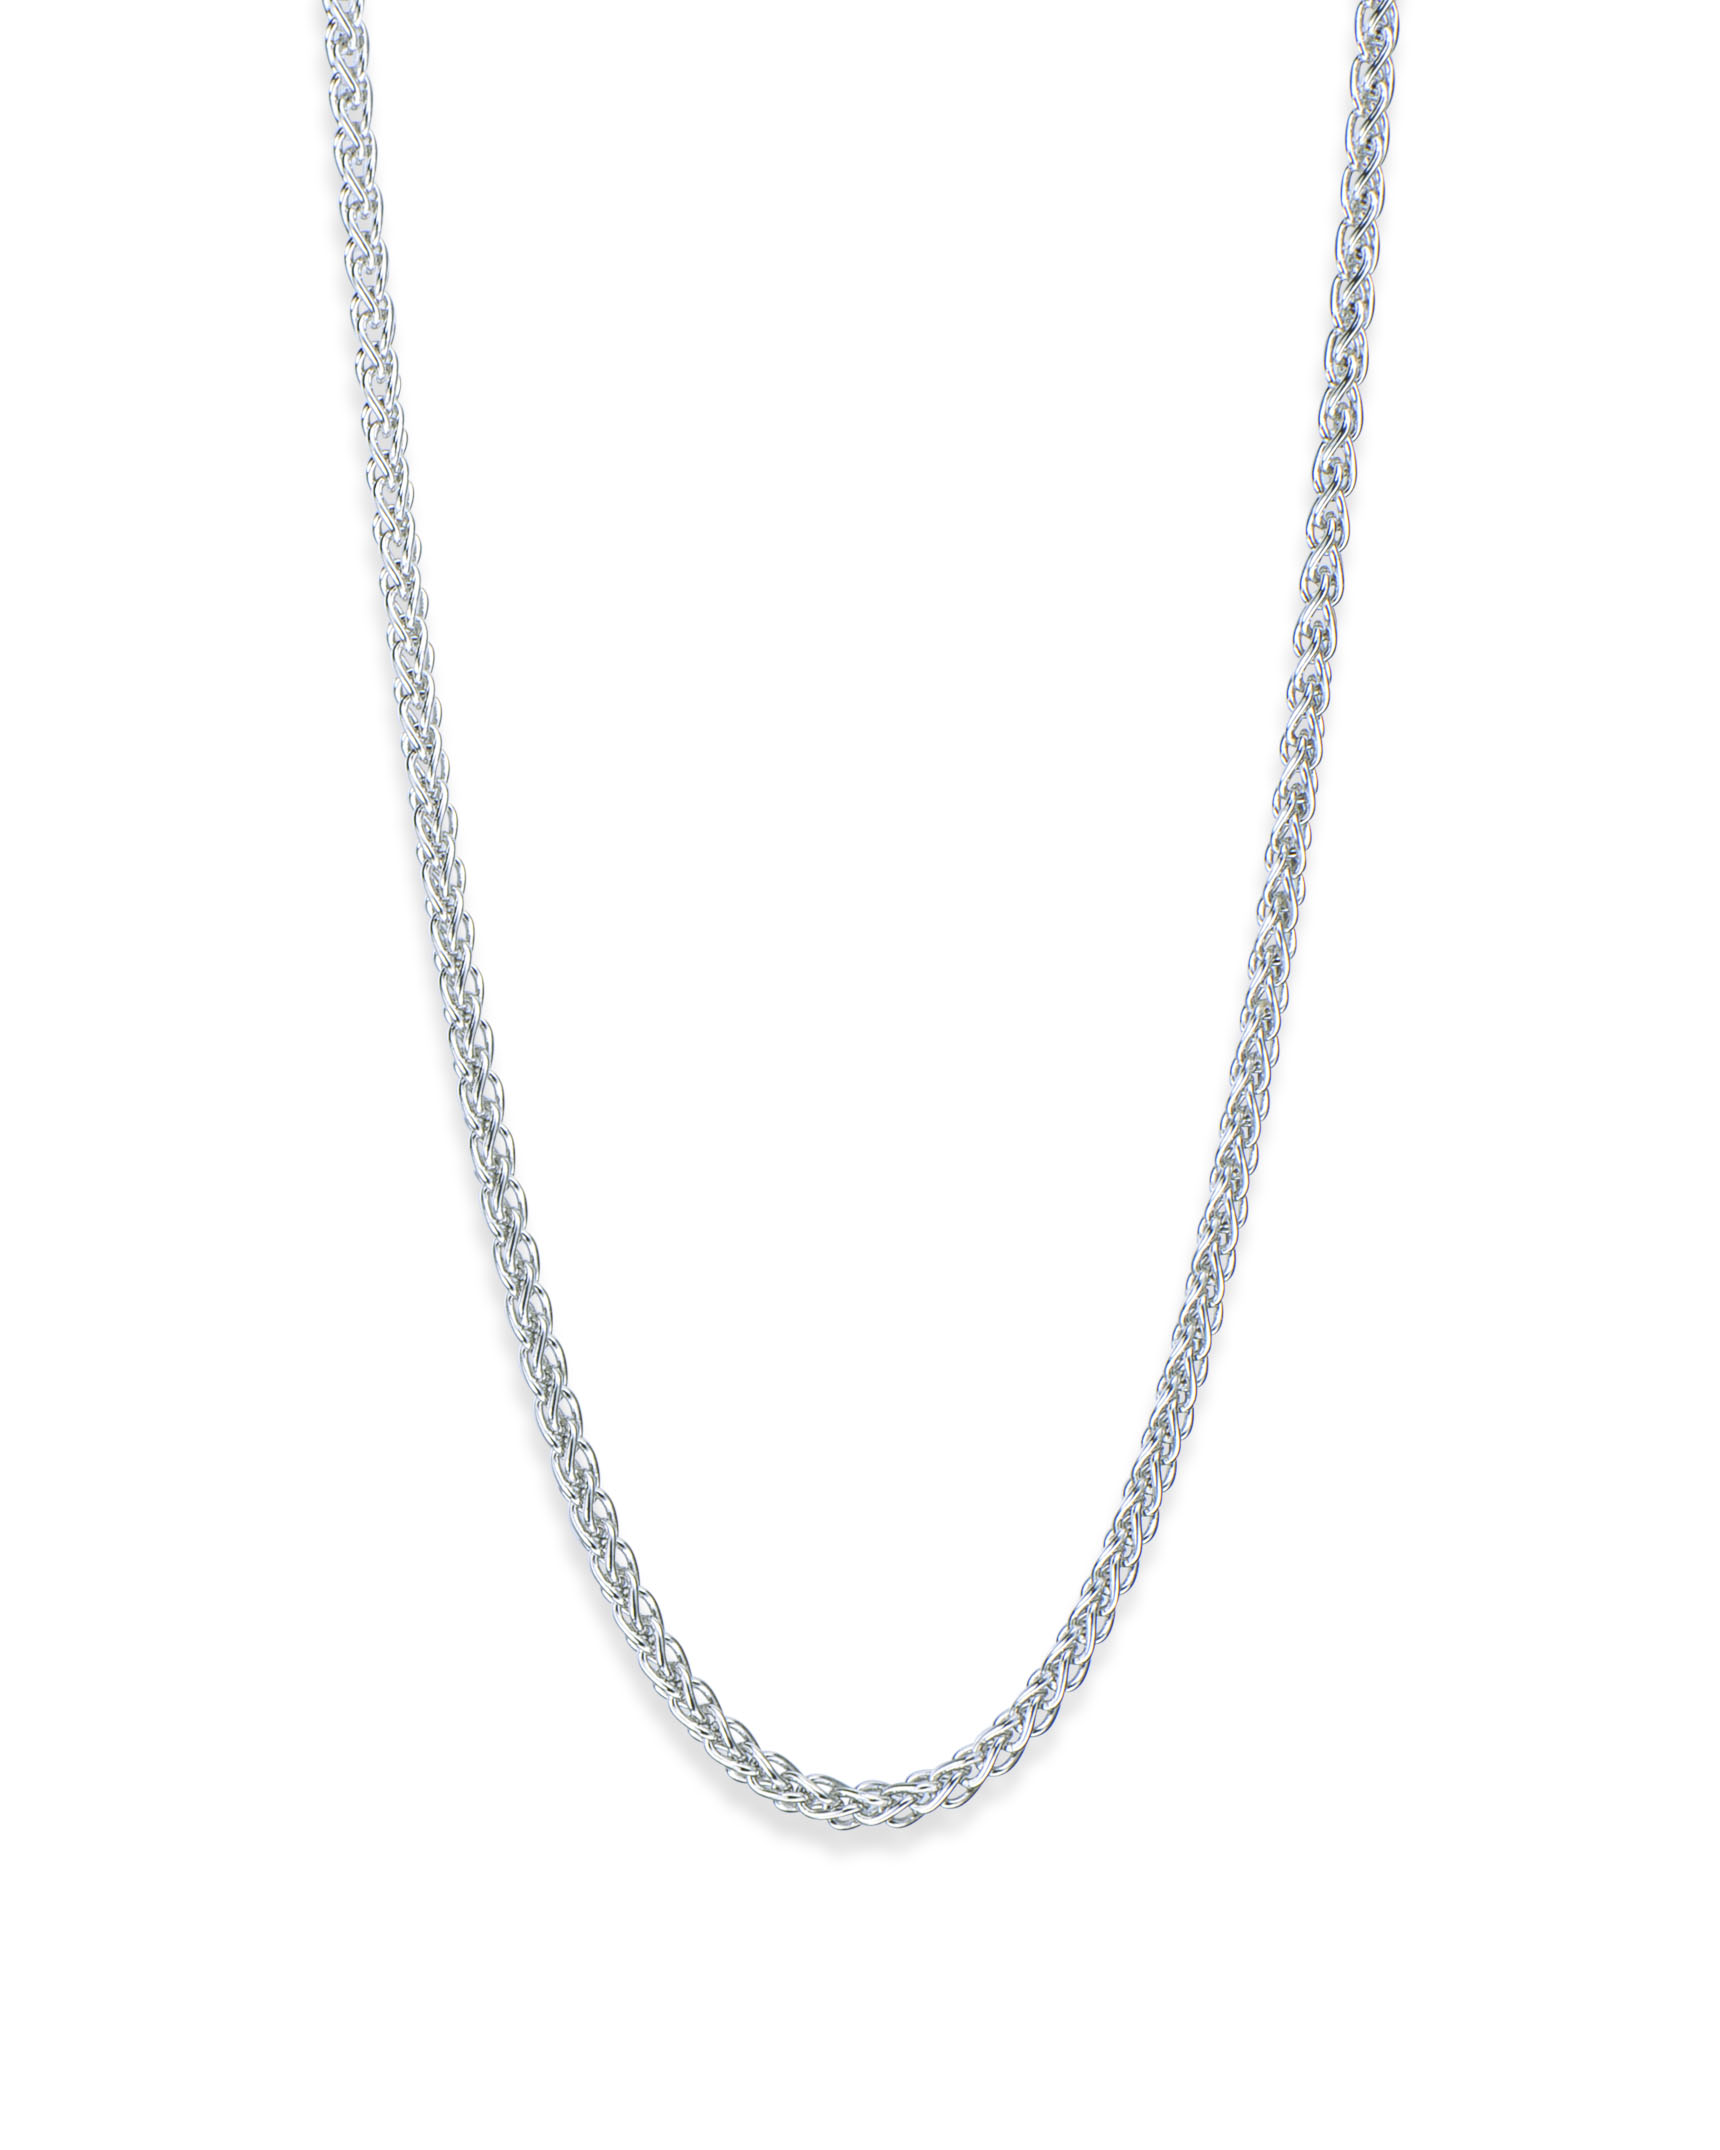 24 White Gold Wheat Chain Necklace - Turgeon Raine